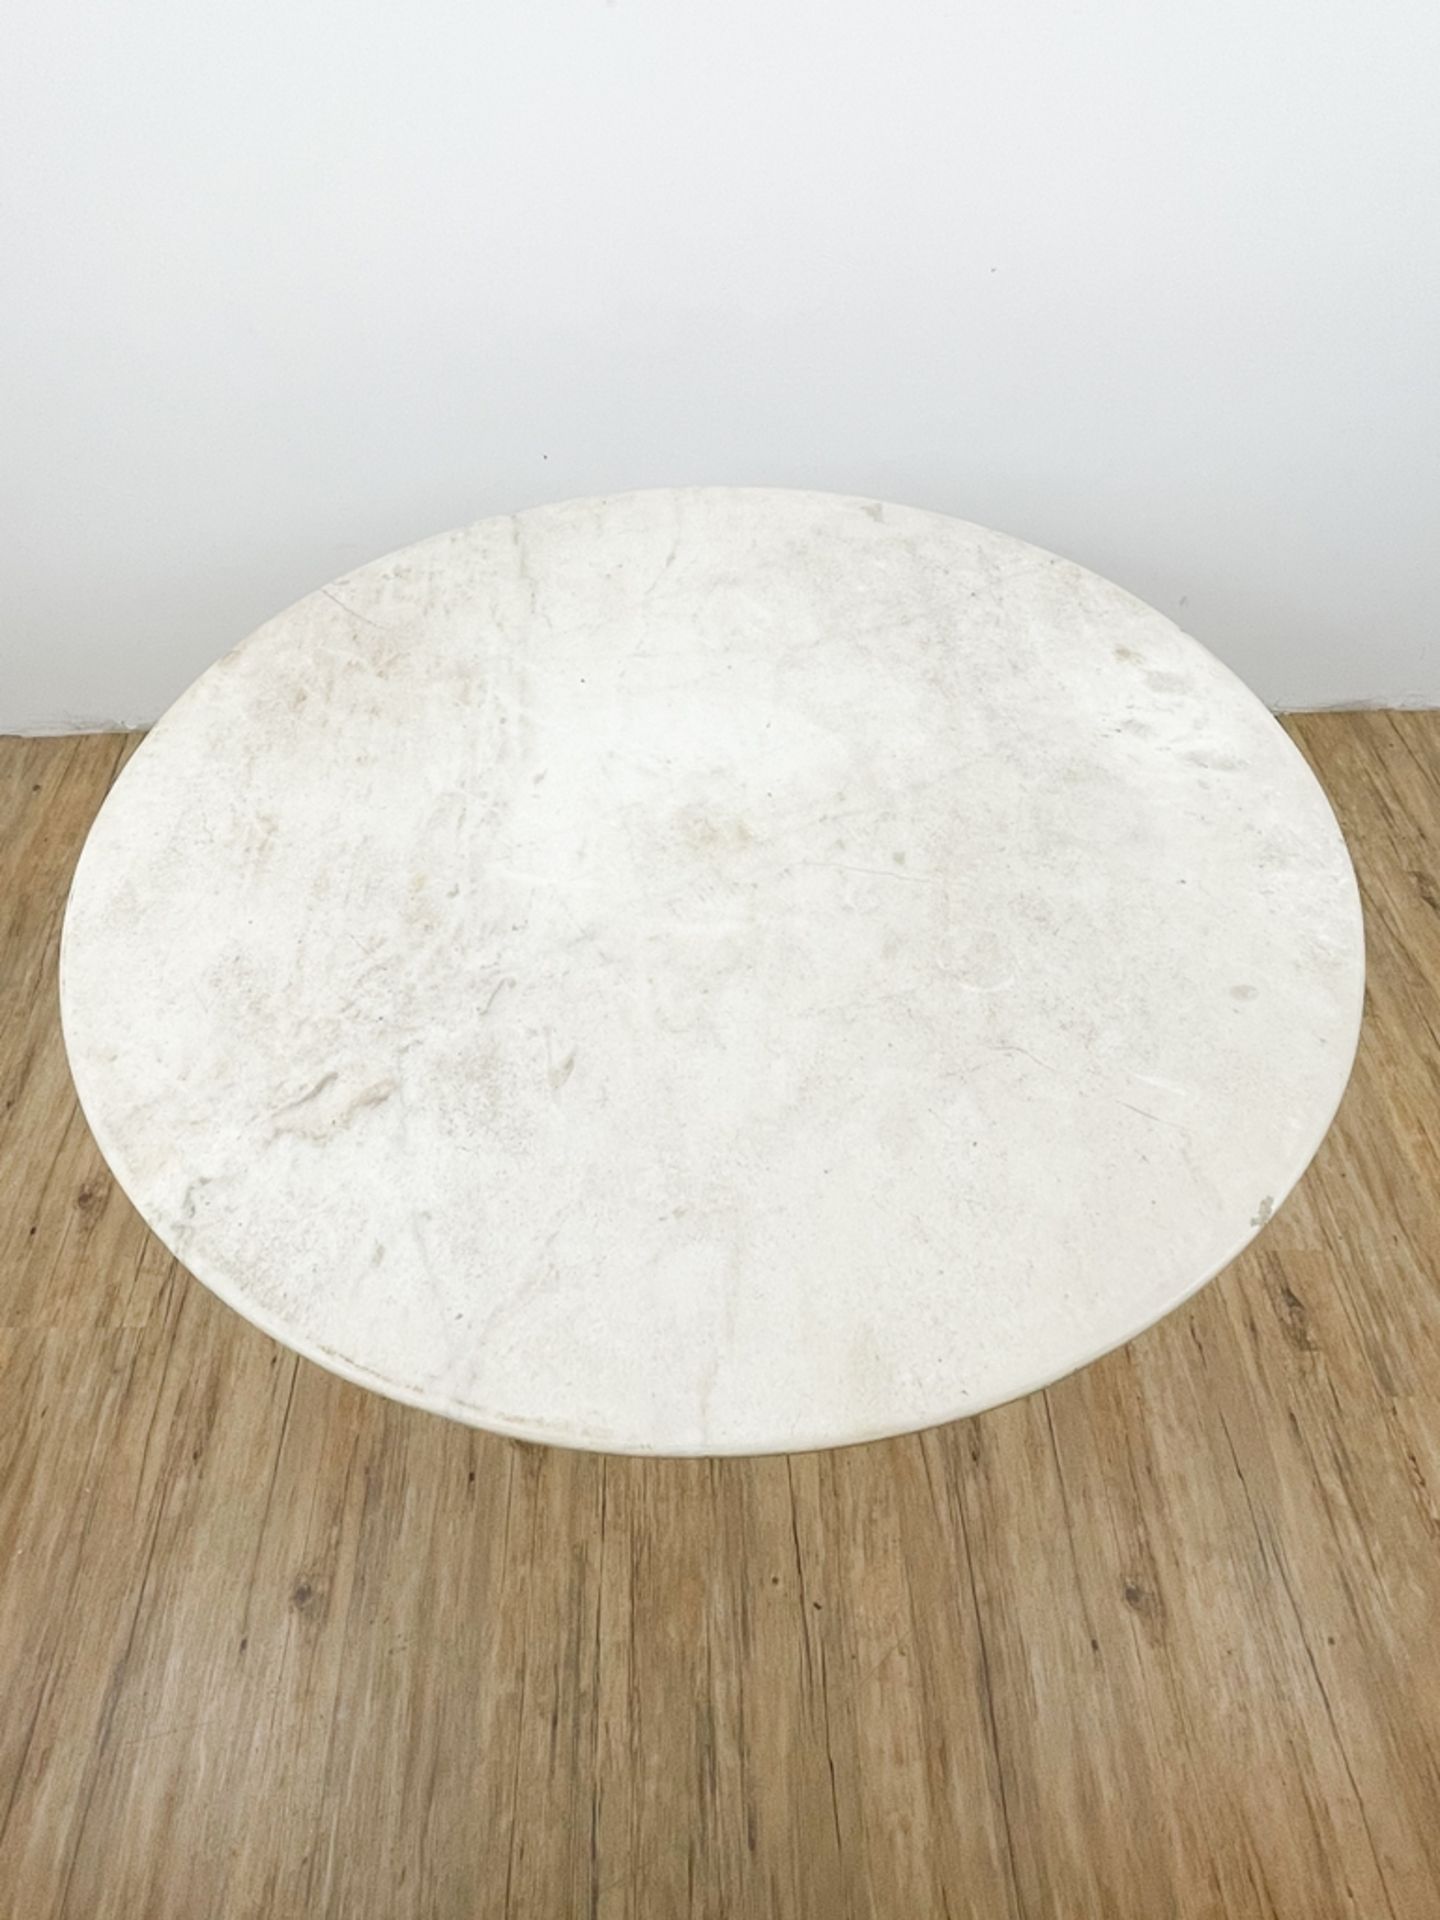 Empire Tisch aus Carrara-Marmor - Image 4 of 6